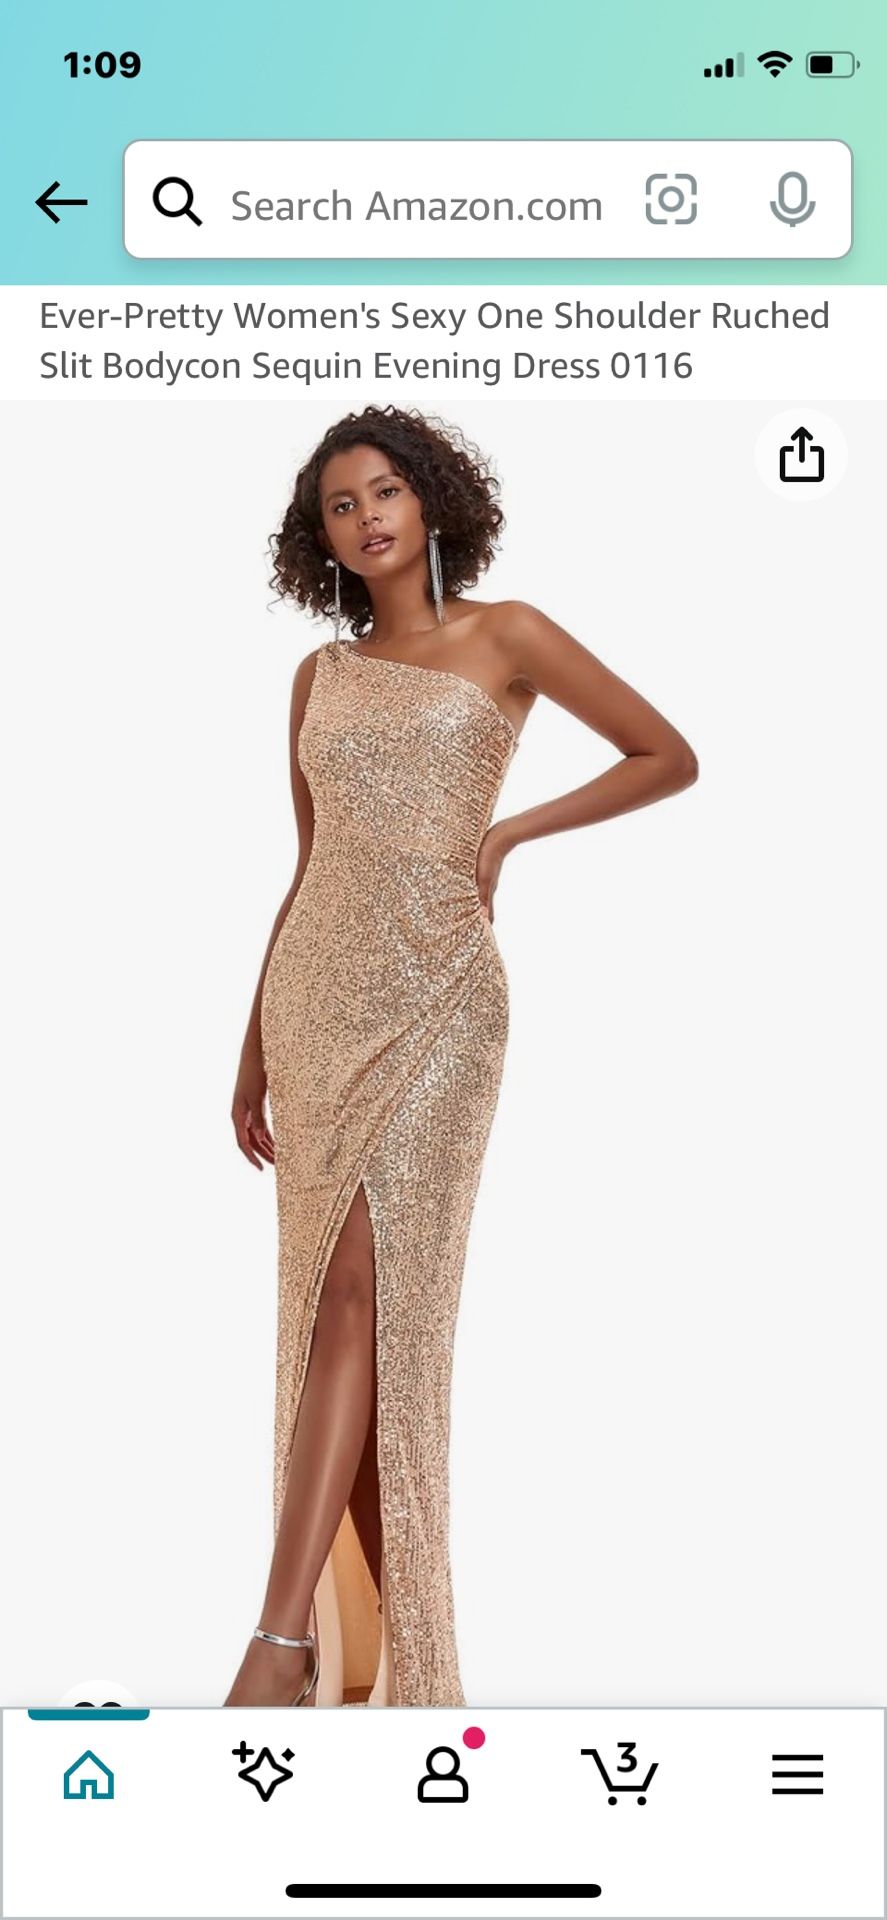 Rose Gold Sequin Dress Size 16